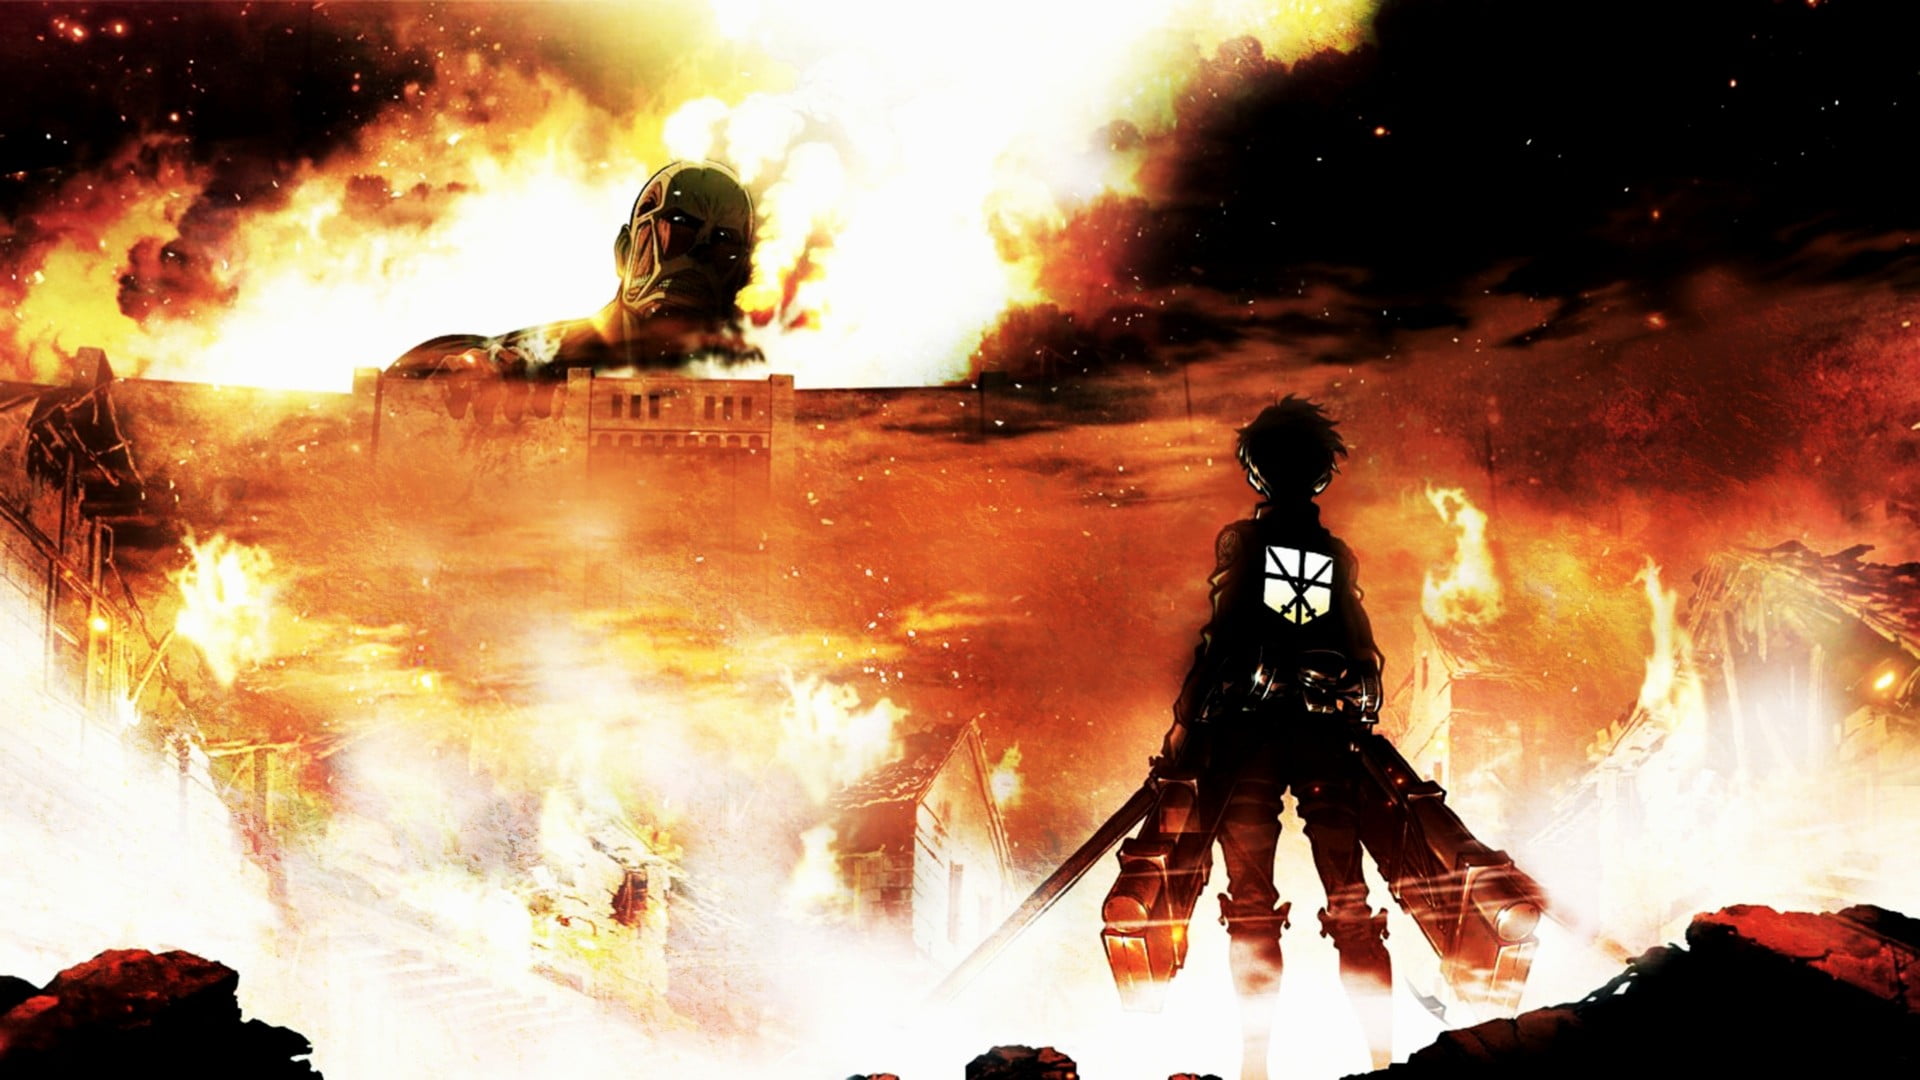 Attack on Titan wallpaper, Shingeki no Kyojin, fire, anime, Colossal Titan